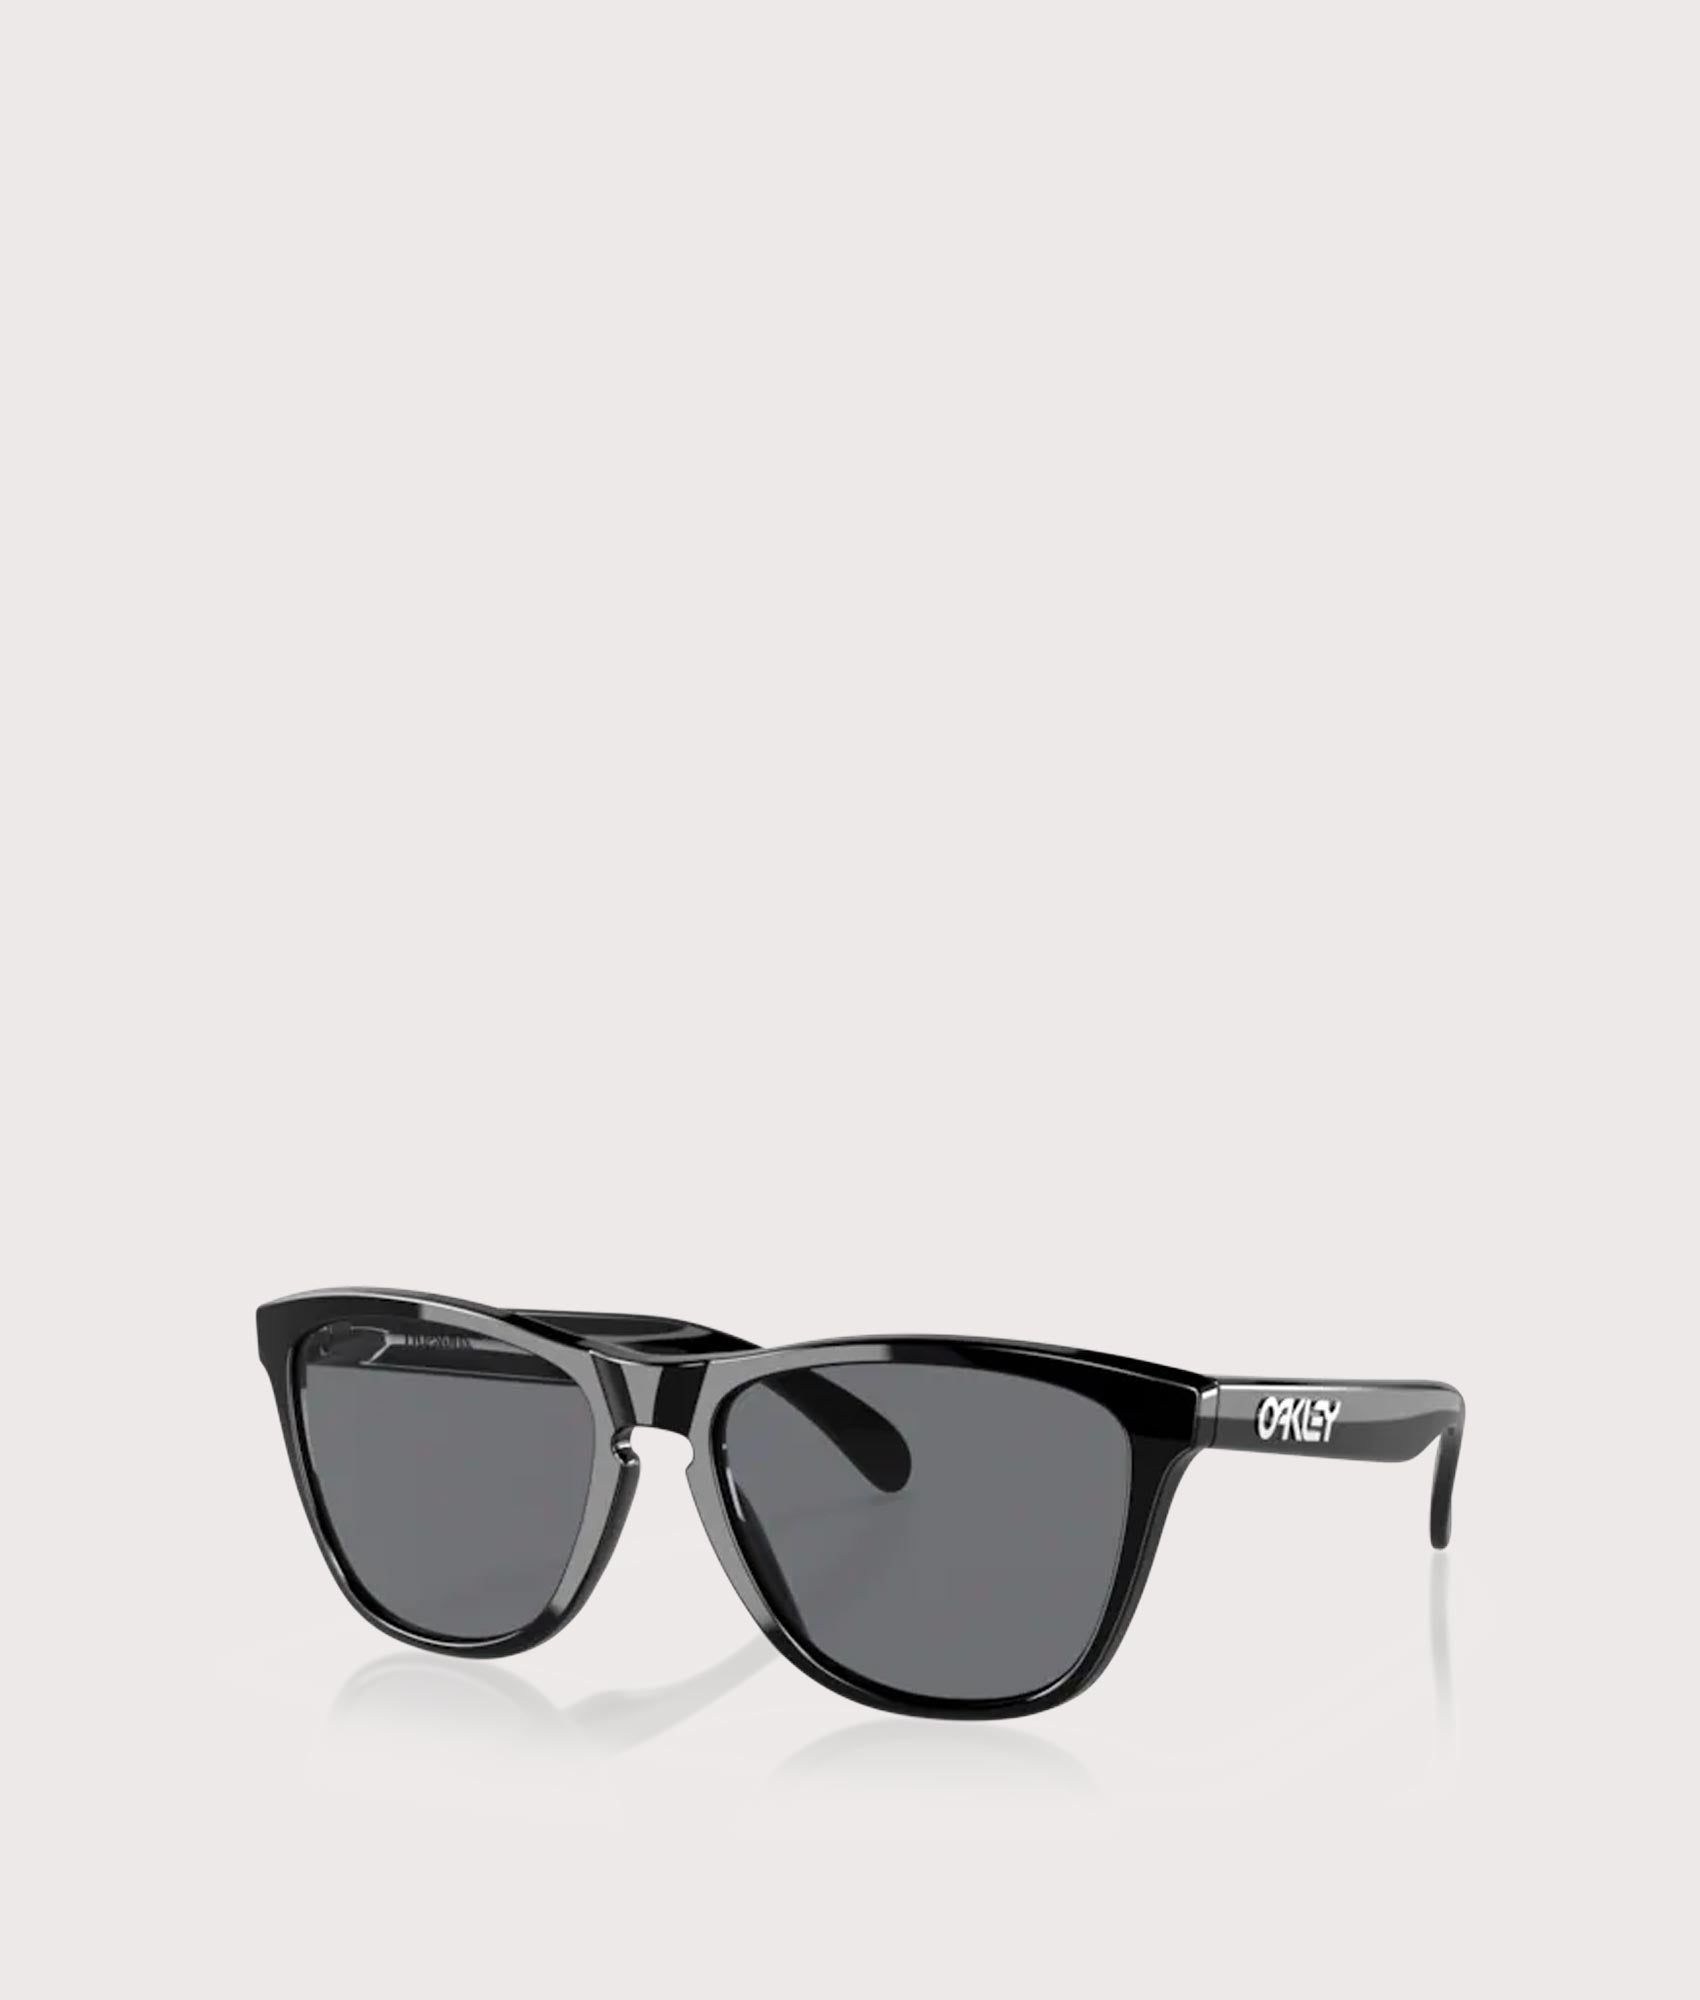 Oakley Mens Frogskins Sunglasses - Colour: 24-306 Polished Black - Size: 55